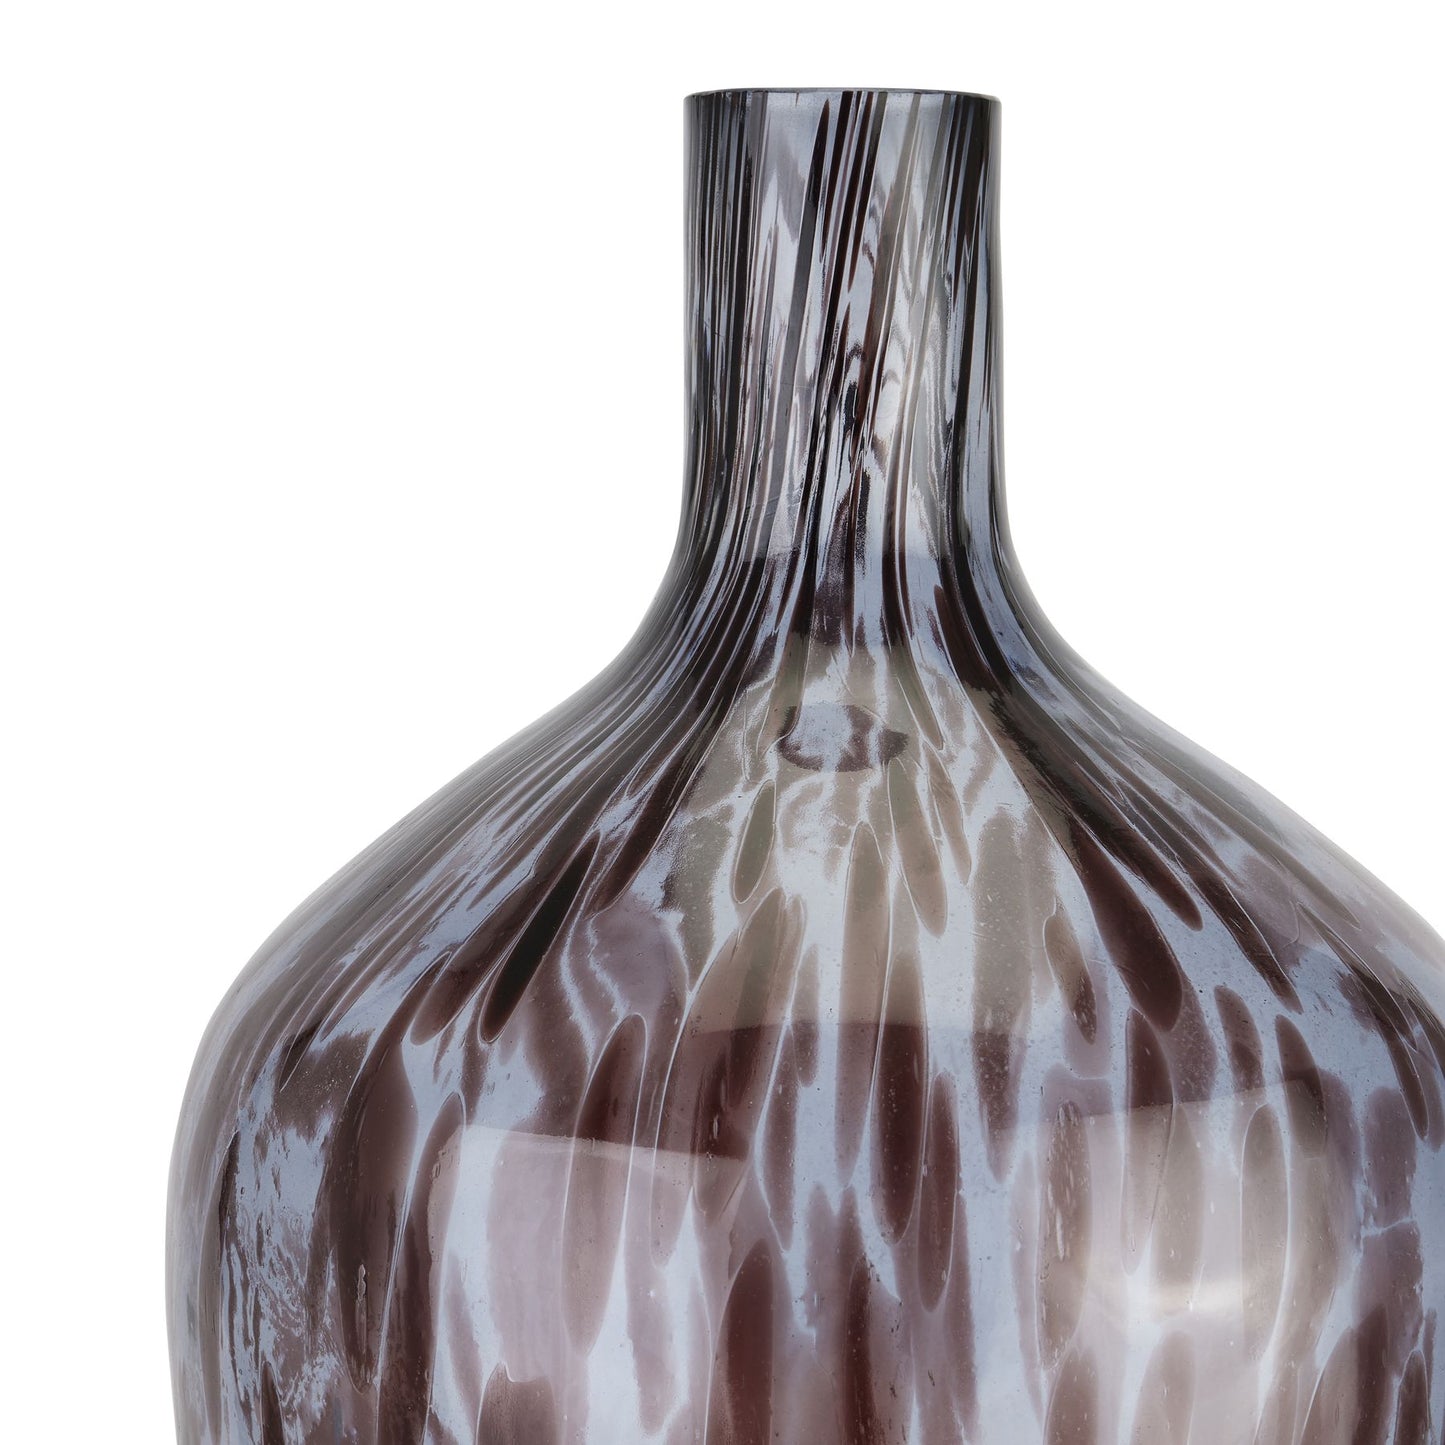 Black & Grey Tortoiseshell Bottle Vase 52cm